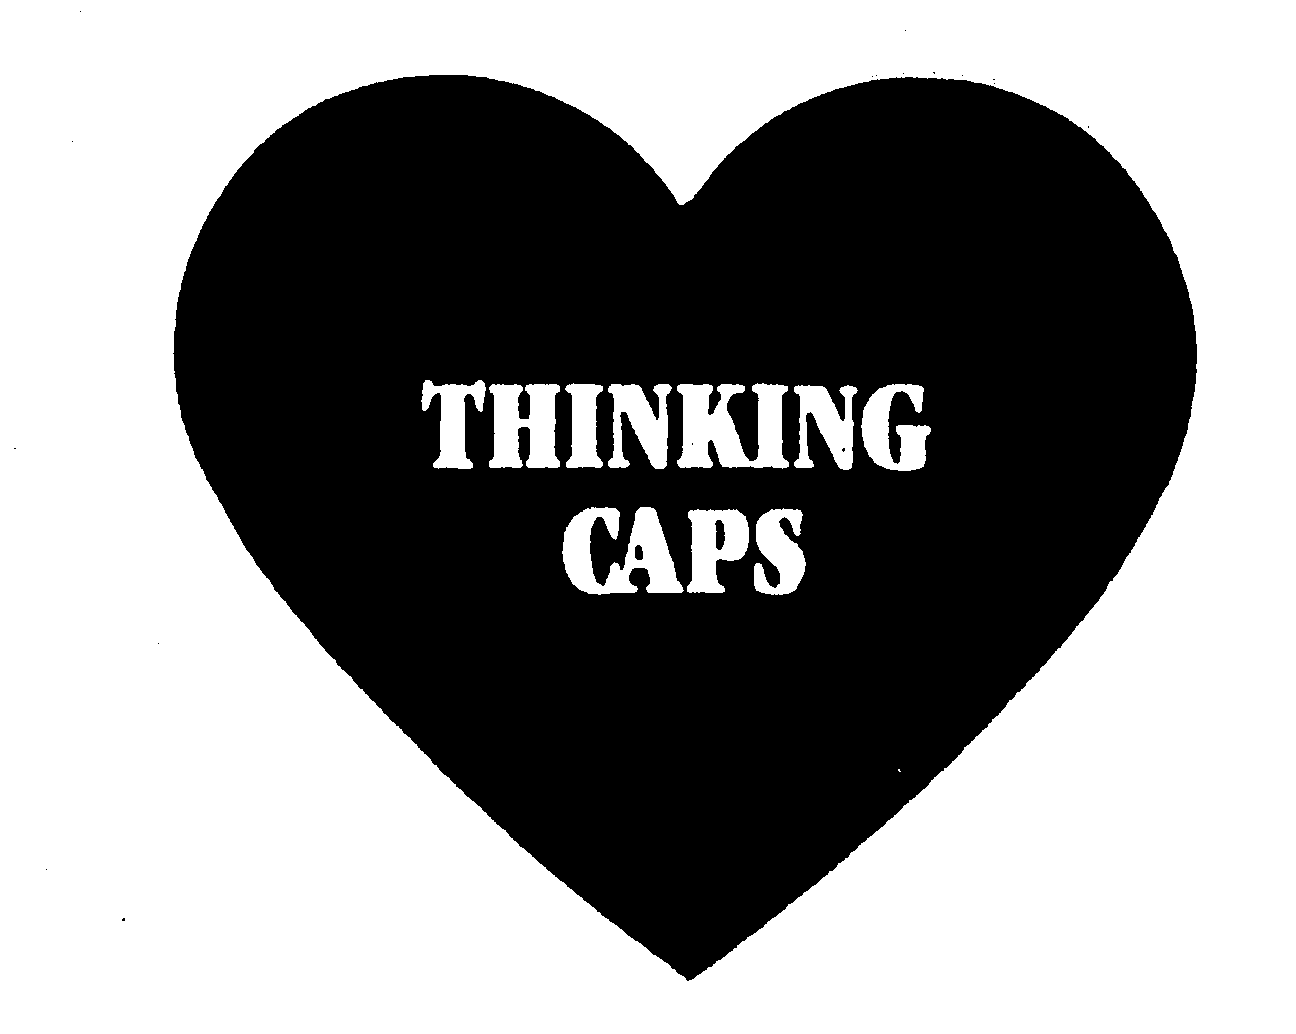  THINKING CAPS